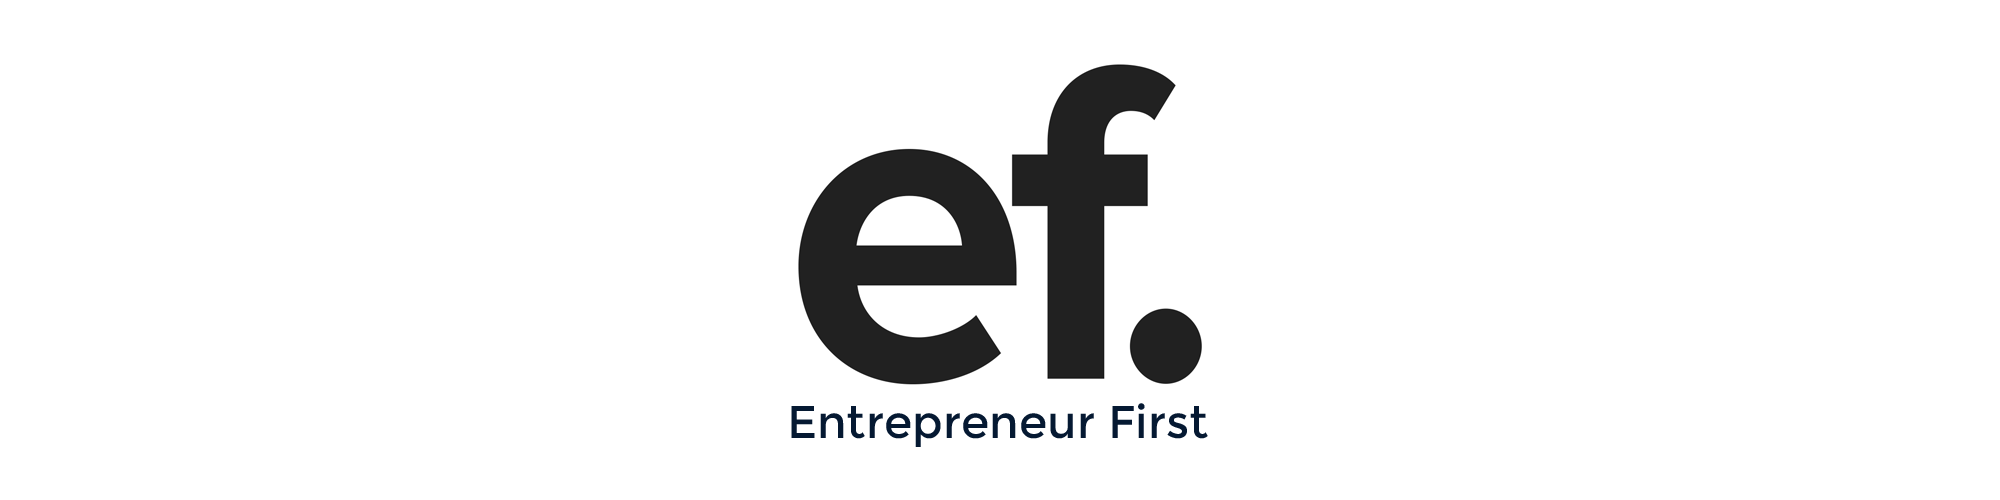 Entrepreneur First (EF) cover